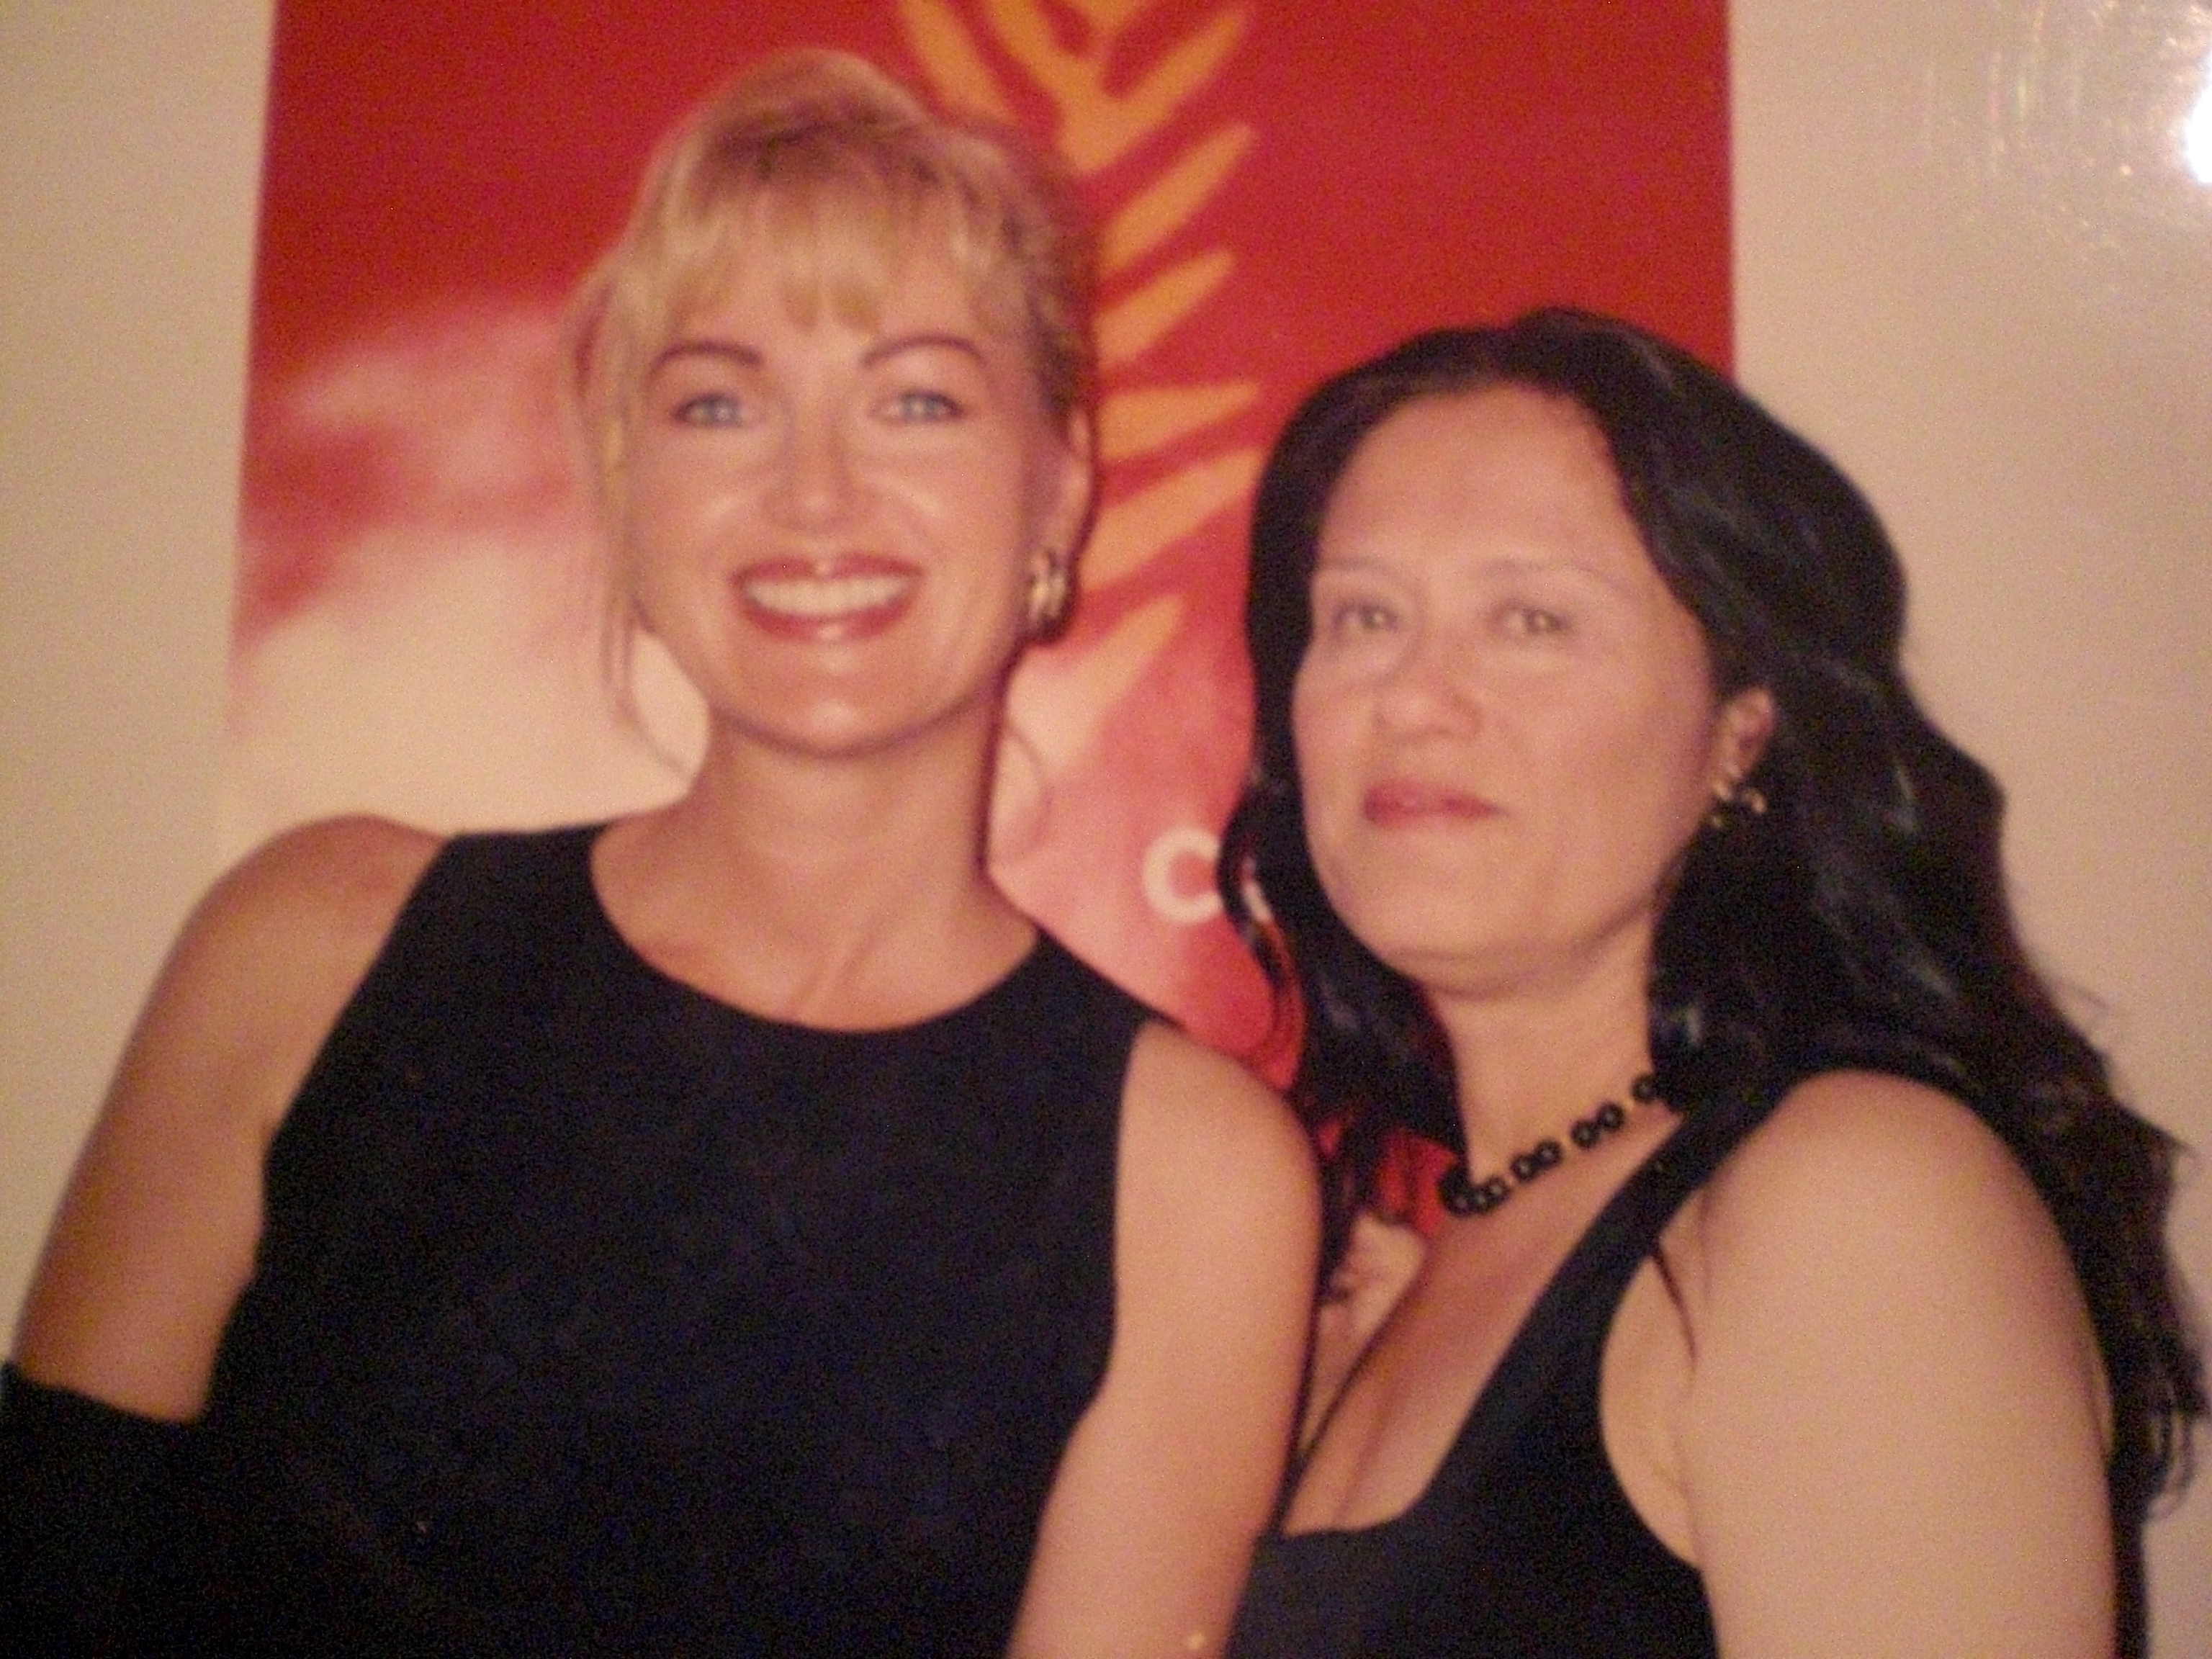 Beatrice De Borg, Barbara Kopple at Palm d'Or Closing Gala